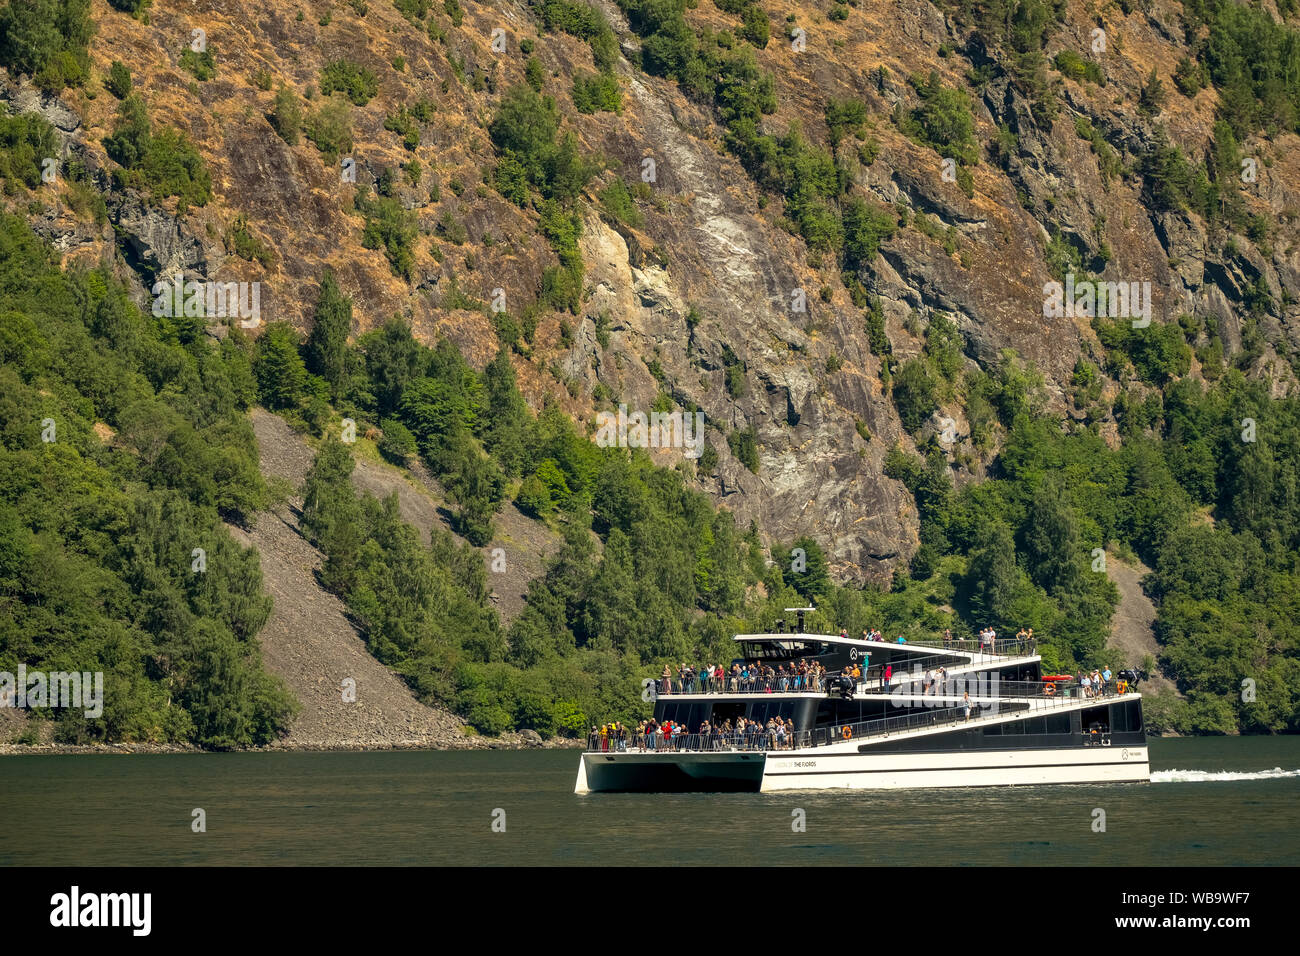 catamaran, The Fjords, excursion ship, fjord, Nærøyfjorden, rock faces, trees, Styvi, Sogn og Fjordane, Norway, Scandinavia, Europe, NOR, travel, tour Stock Photo